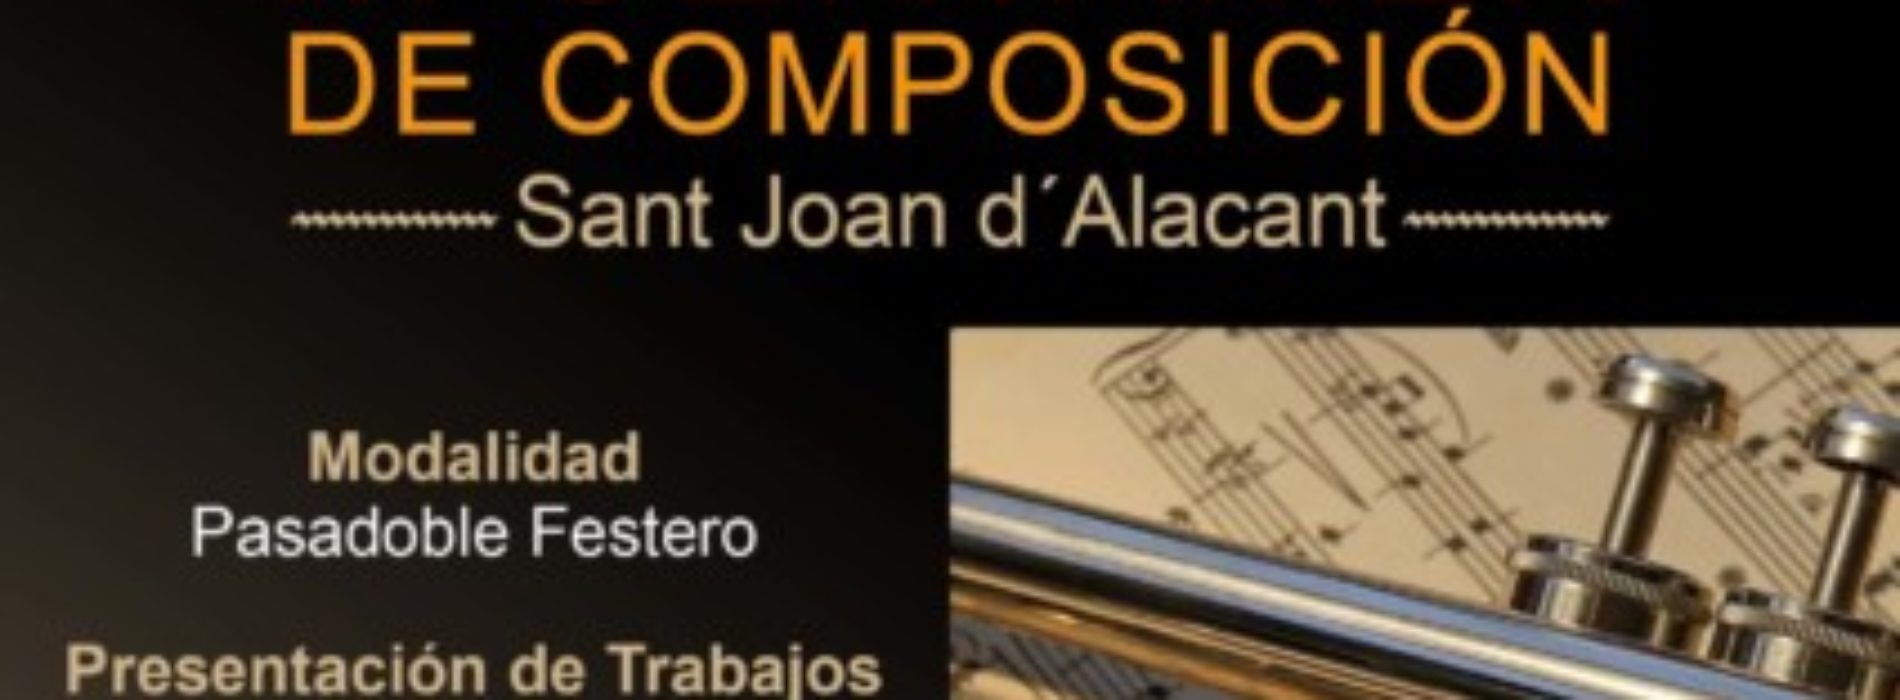 Fernando Campos Valdés gana el III Certamen de Composición Musical “Sant Joan d’Alacant”